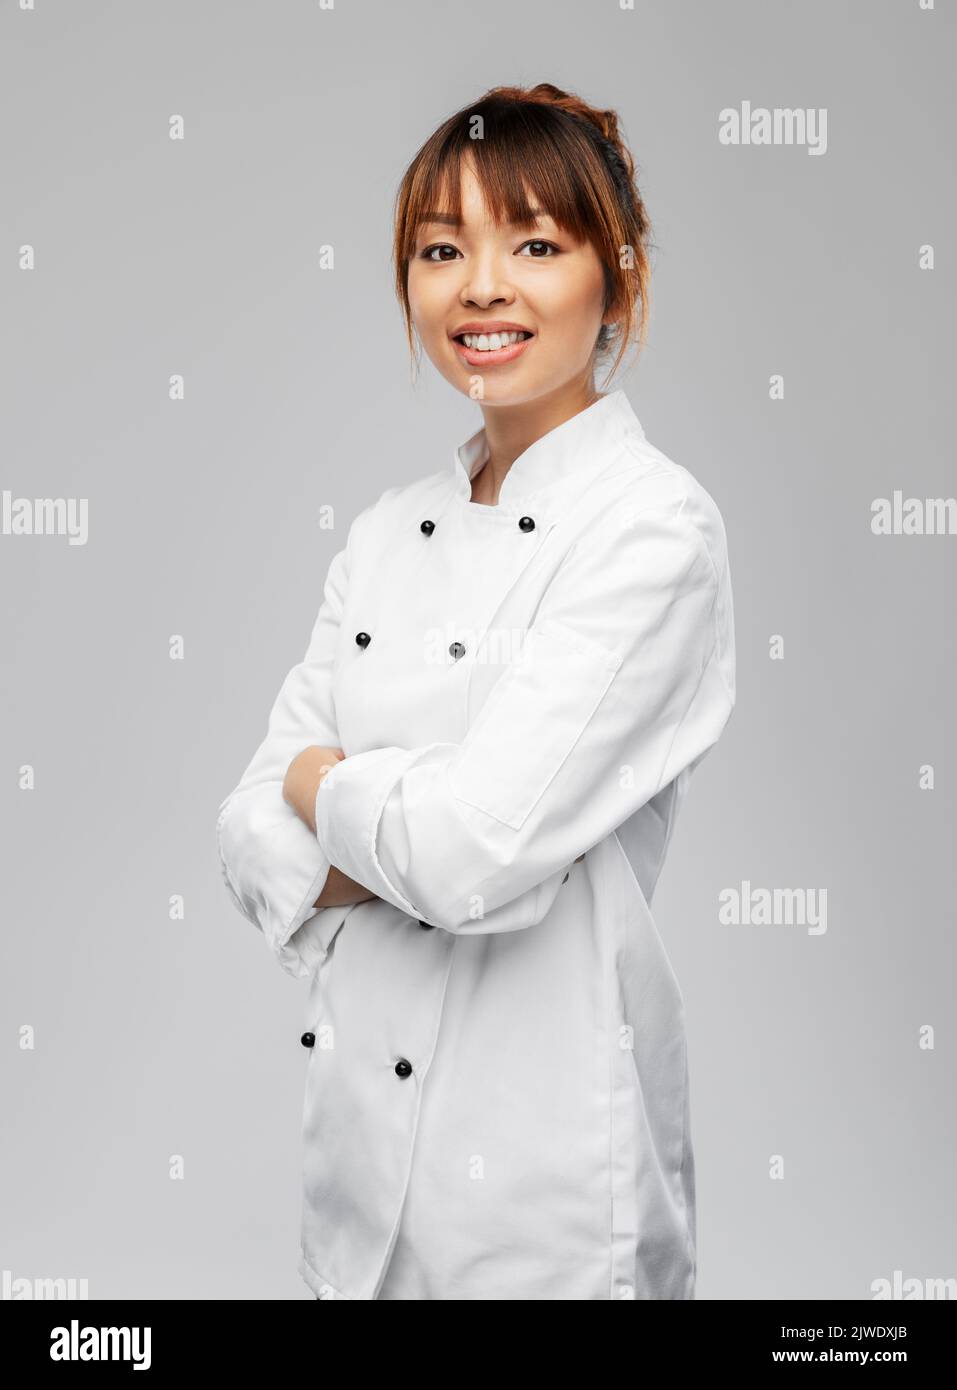 smiling female chef in white jacket Stock Photo